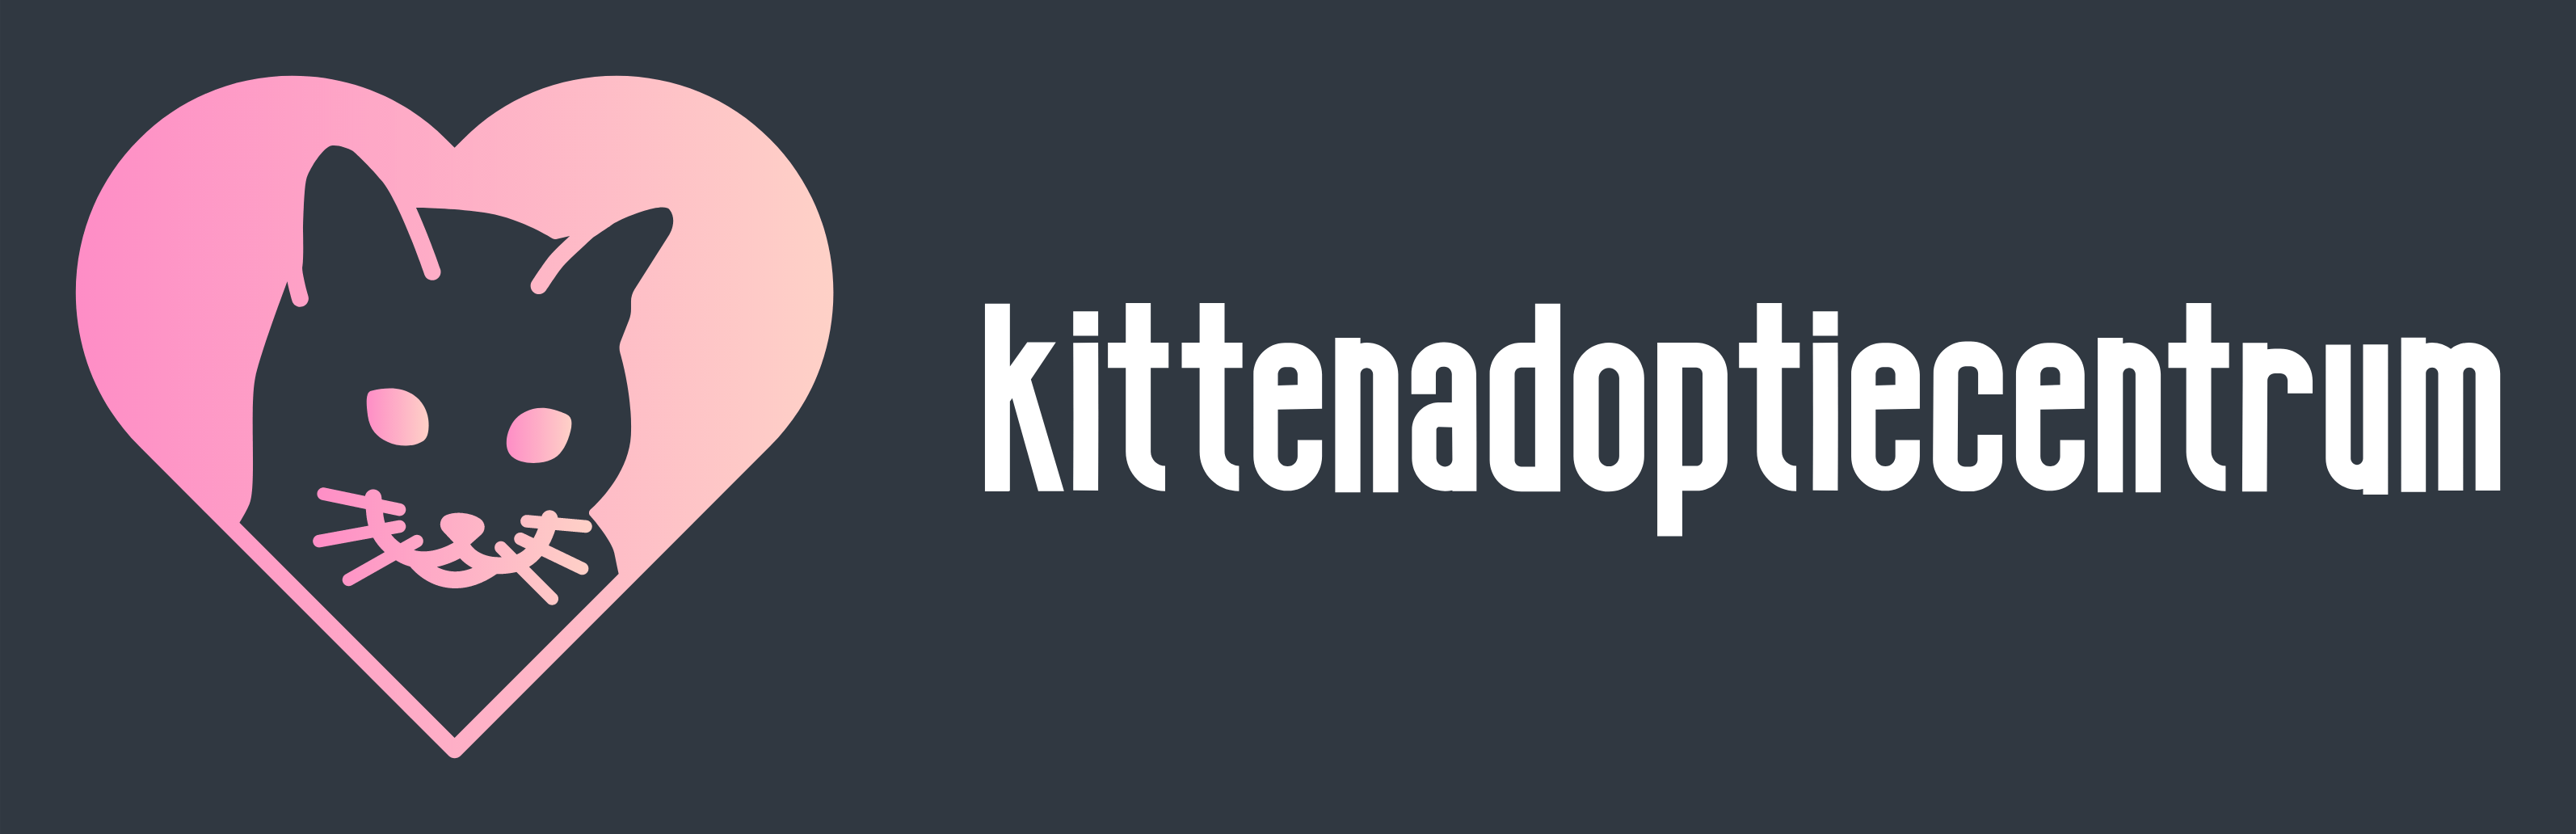 kittenadoptiecentrum